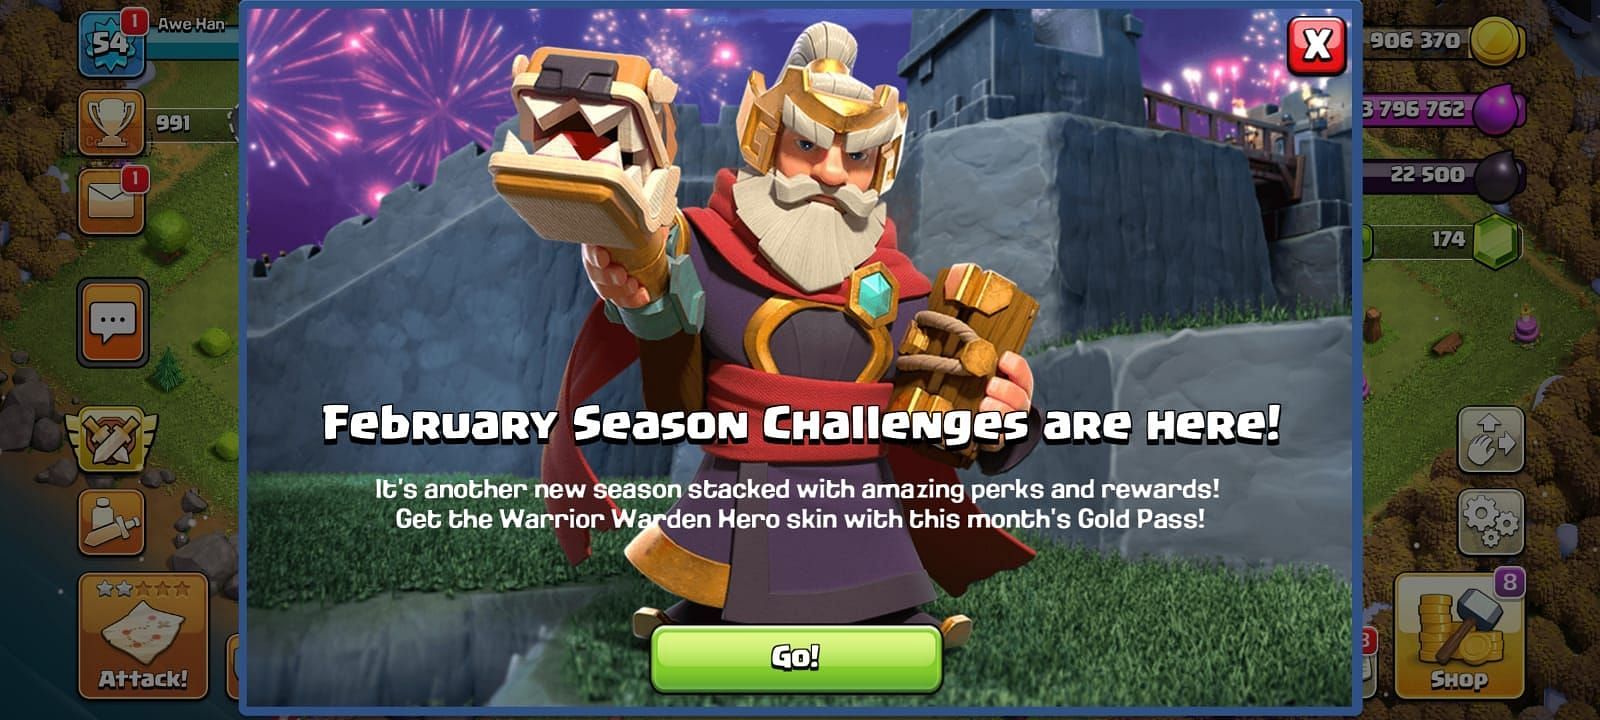 New season challenges, rewards, and perks (Image via Sportskeeda)